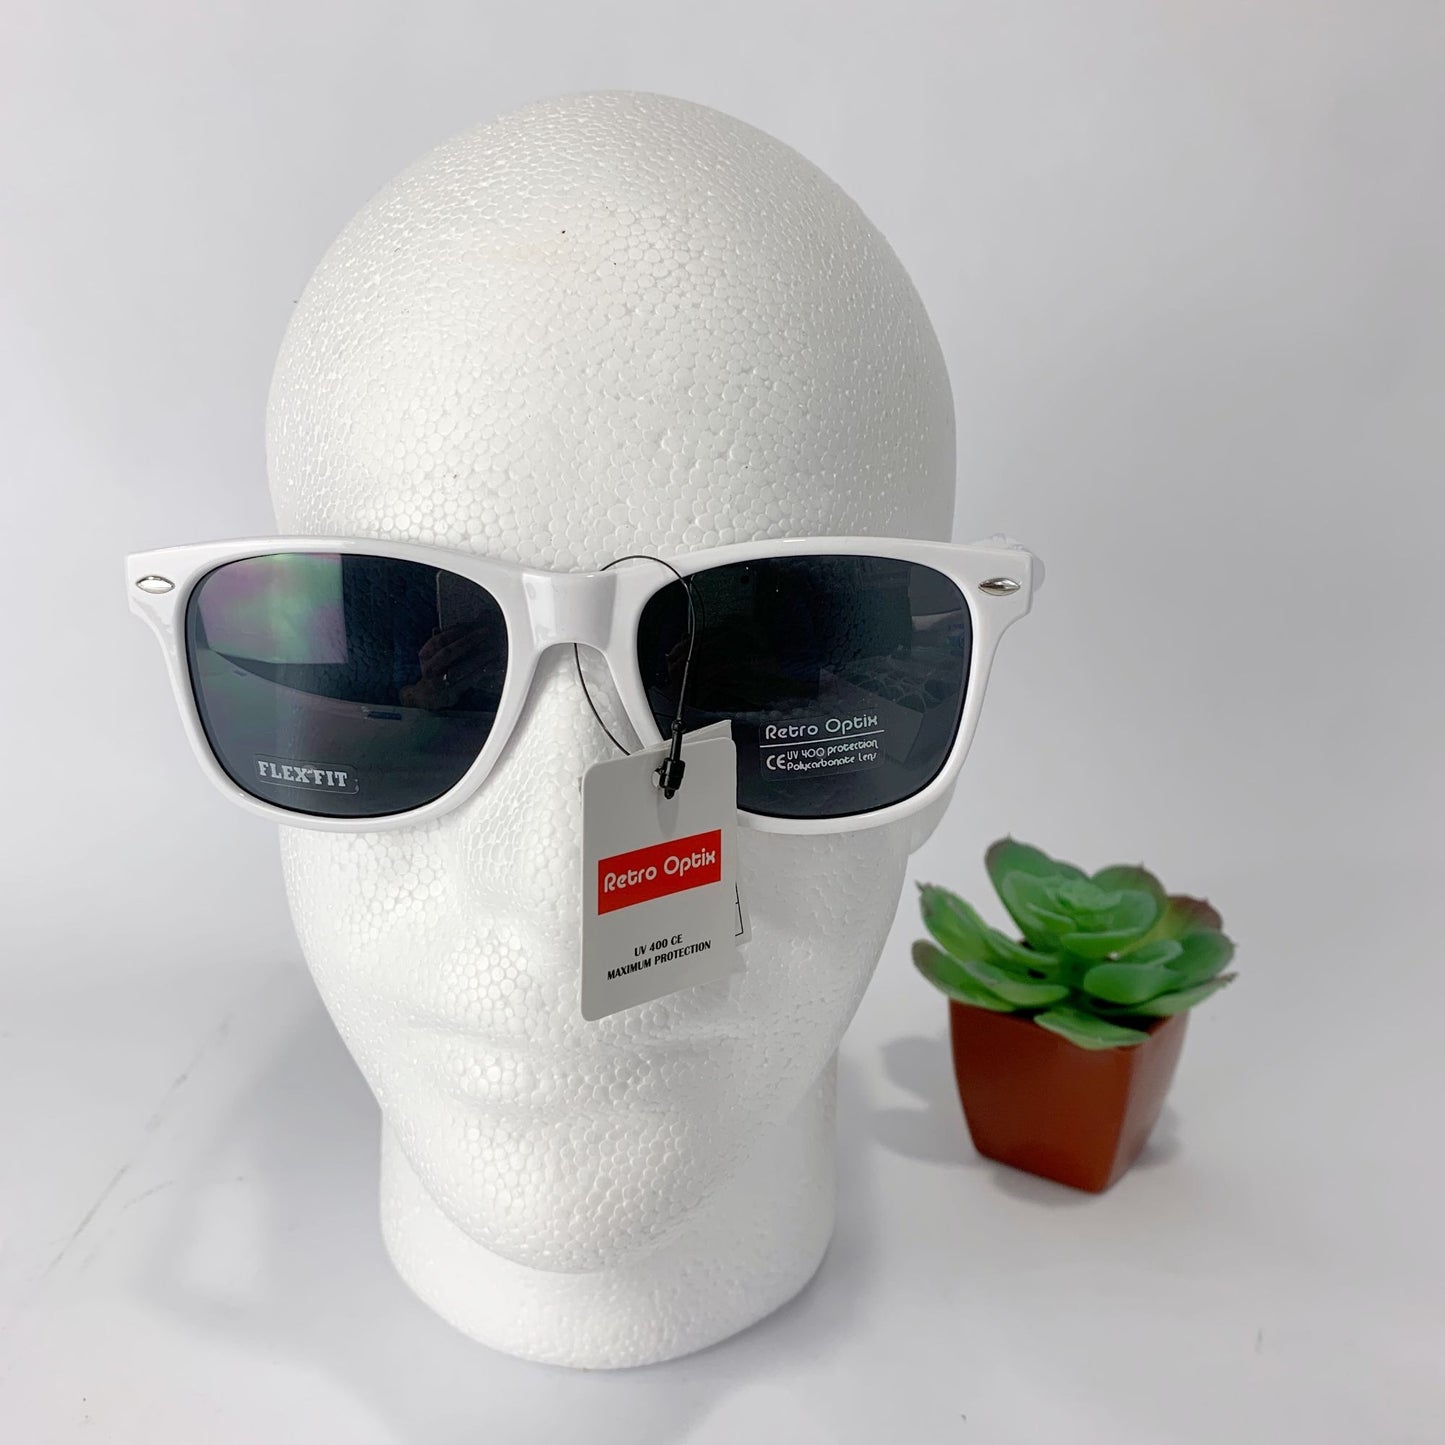 NEW Classic White Unisex Sunglasses